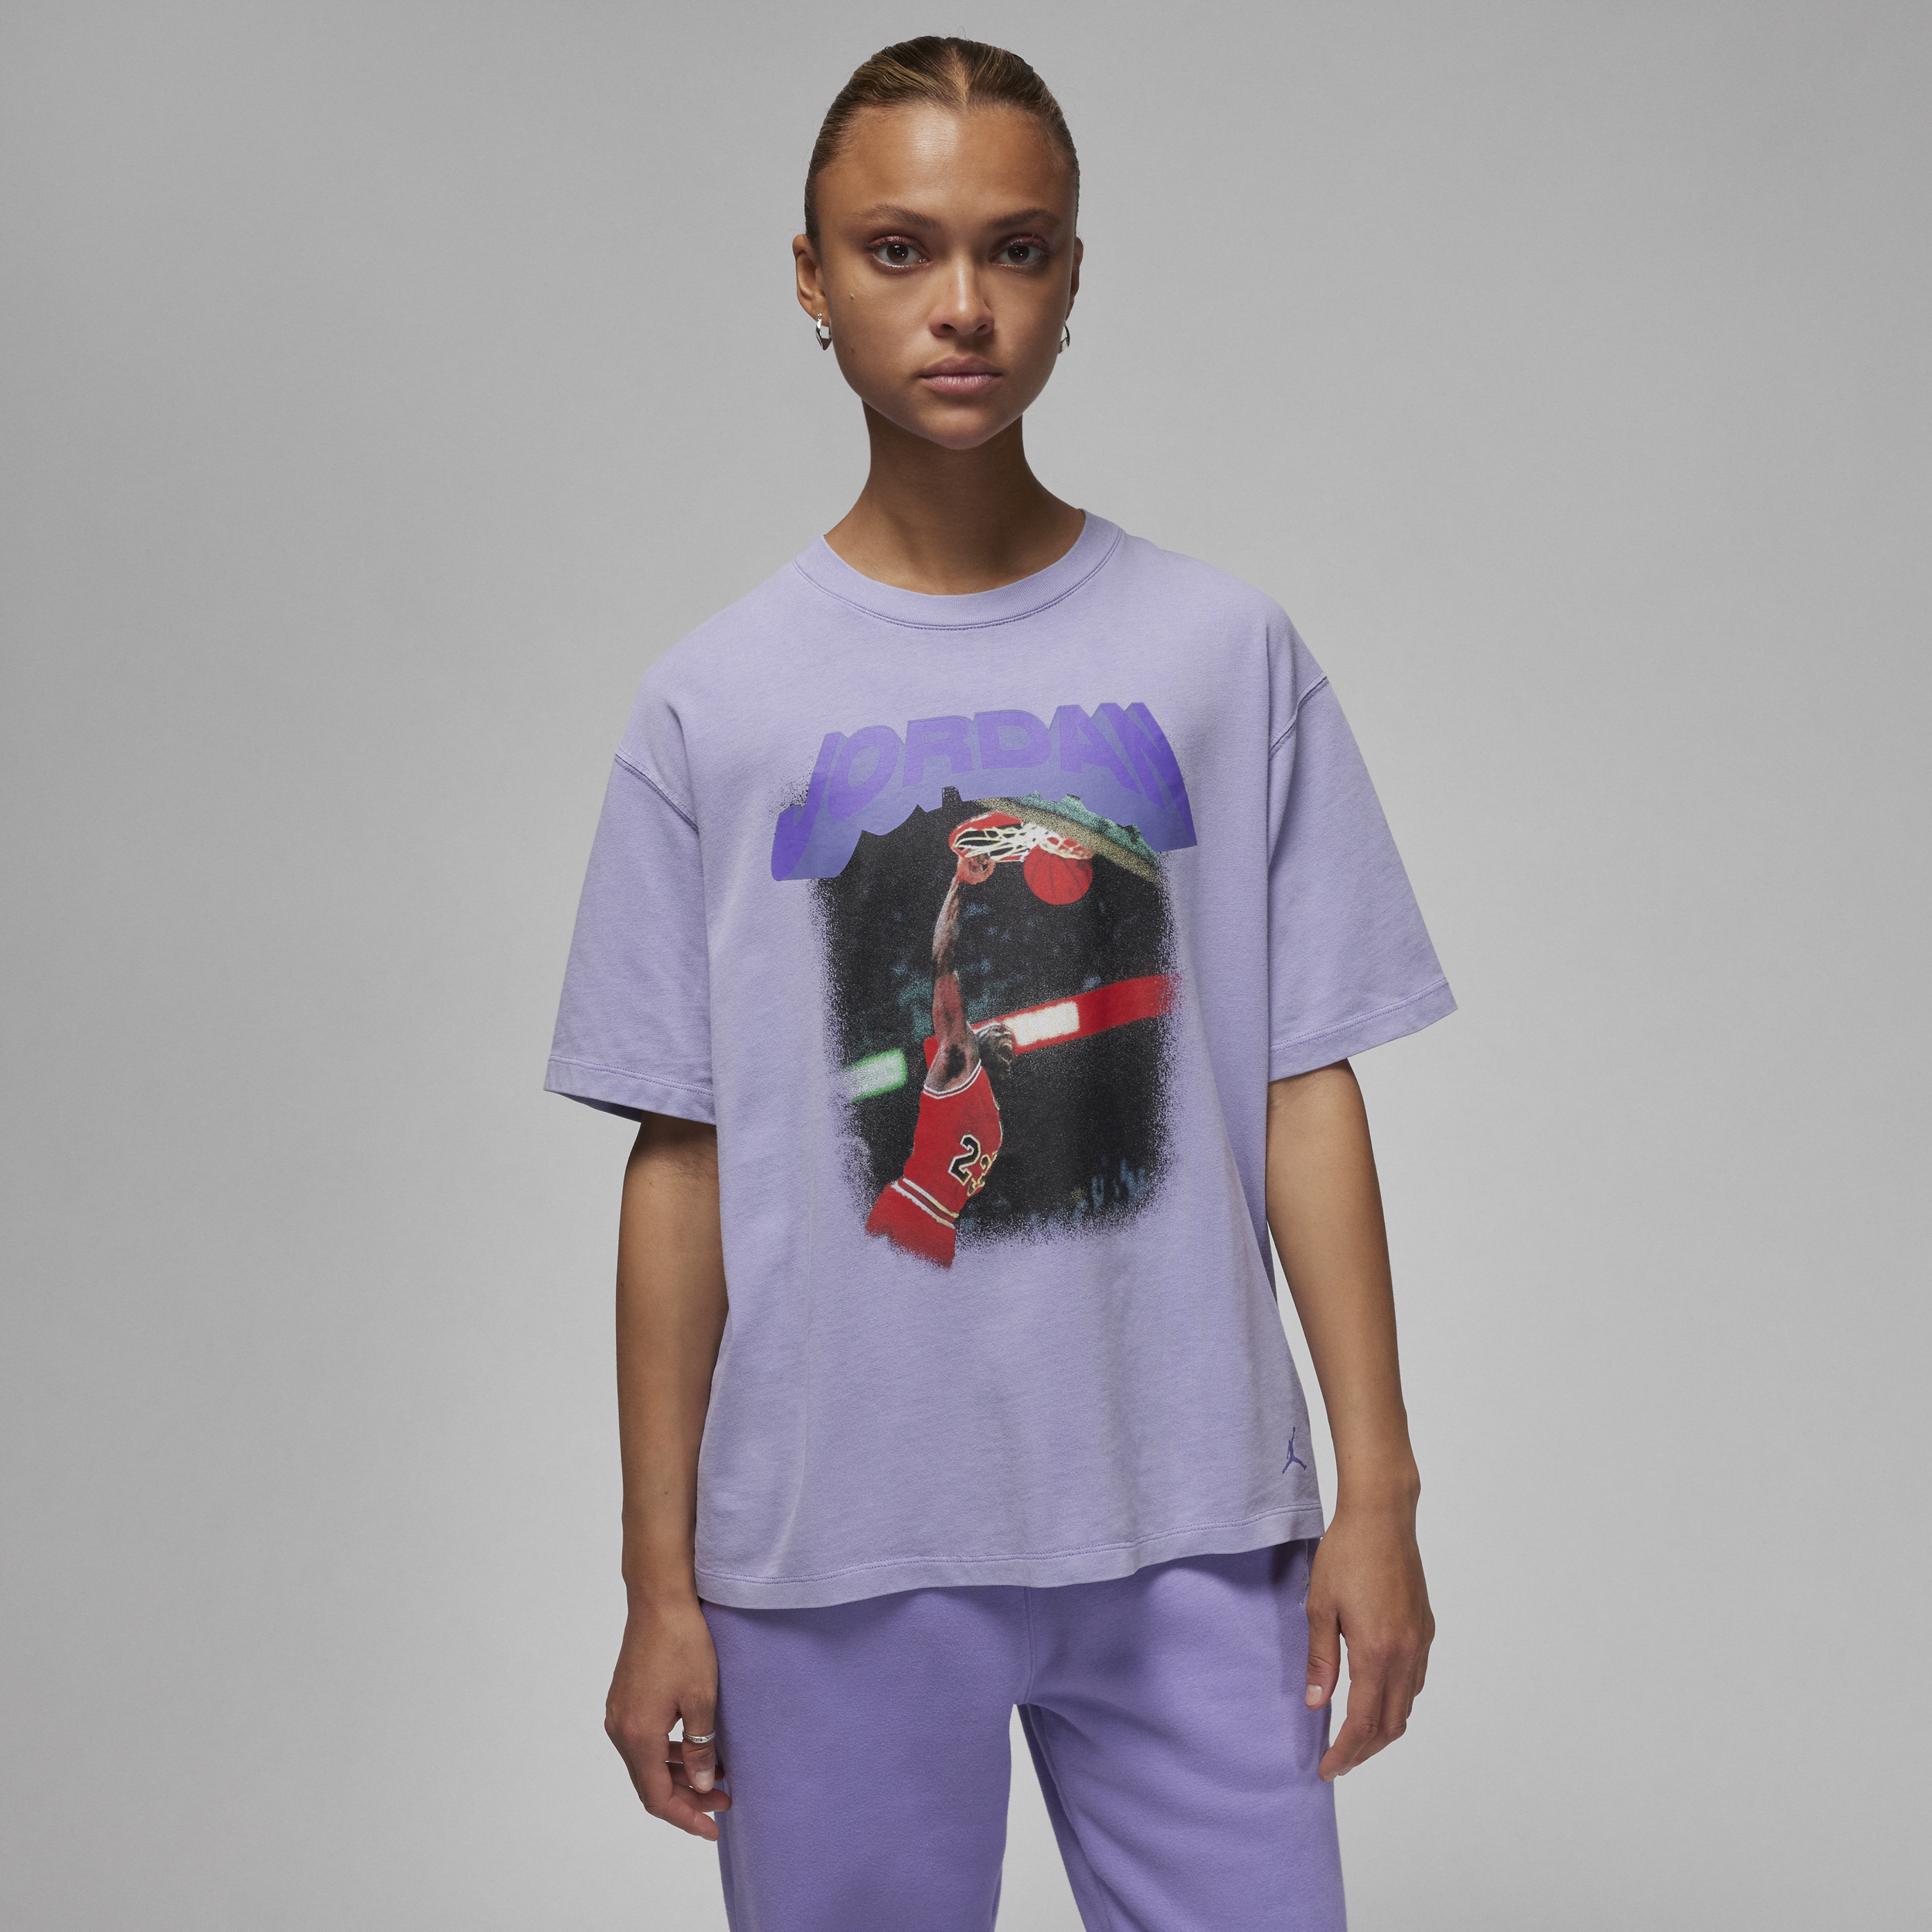 Nike T-shirt con grafica Jordan (Her)itage – Donna - Viola